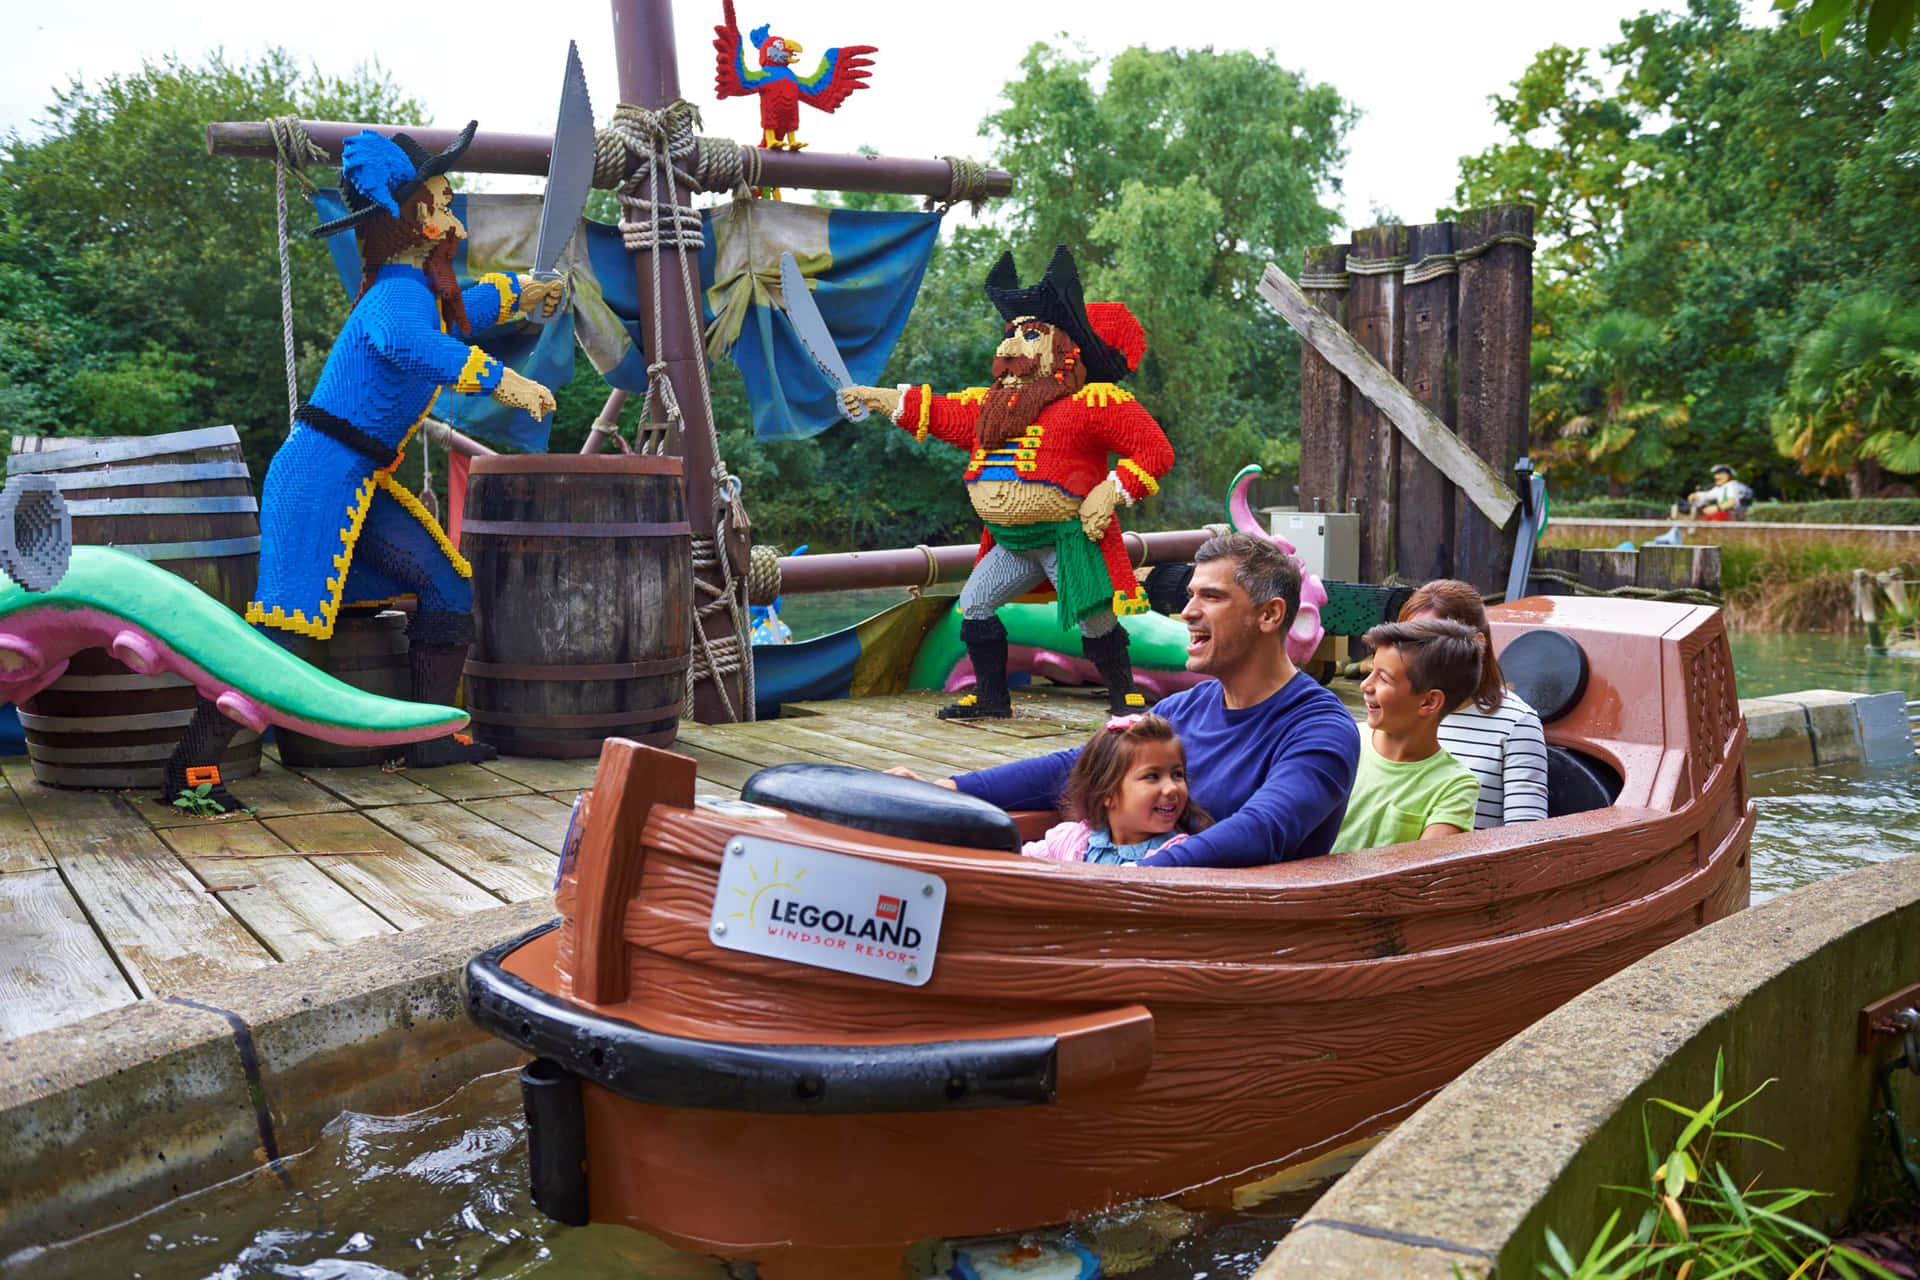 Explore the fun and wonder of Legoland!